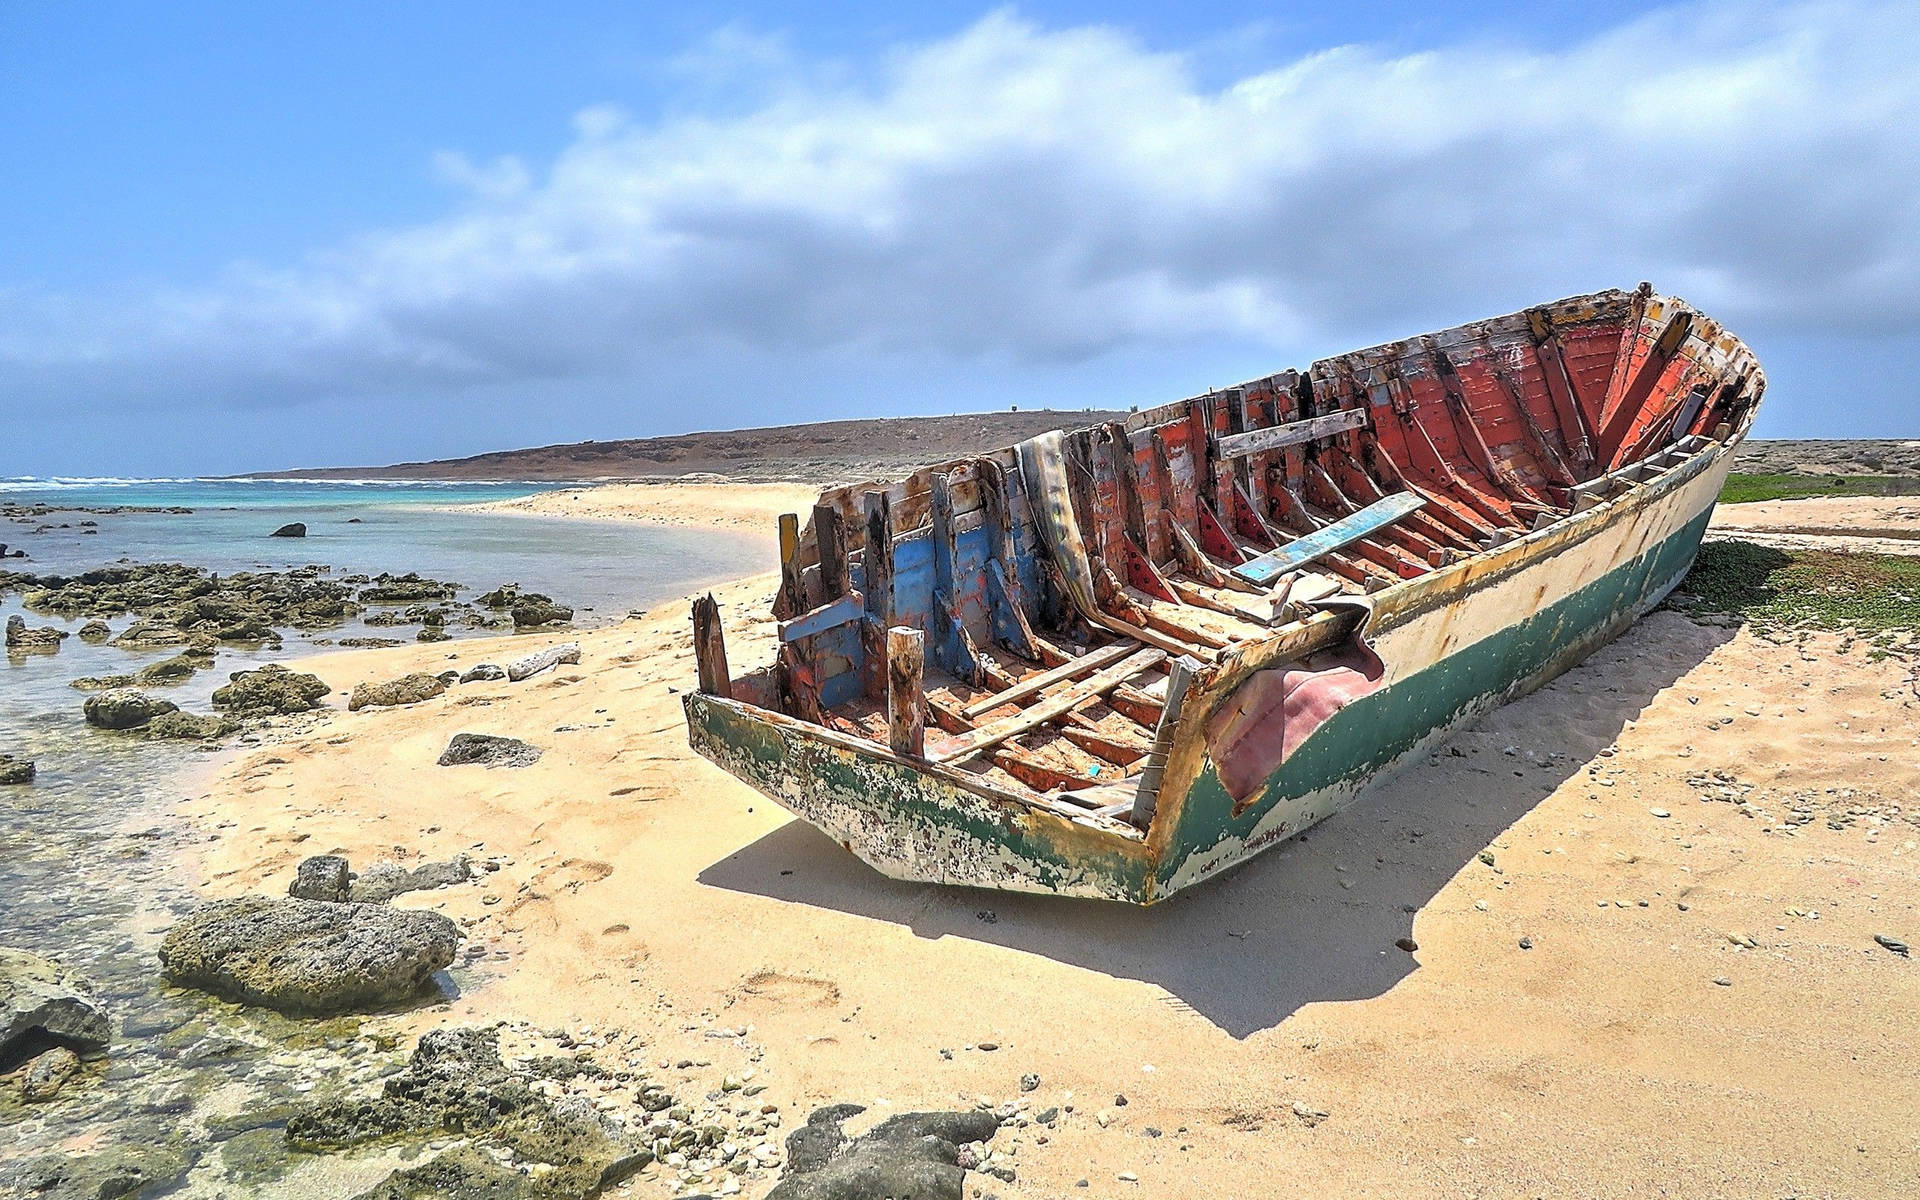 Aruba Beach Wrecked Boat Background